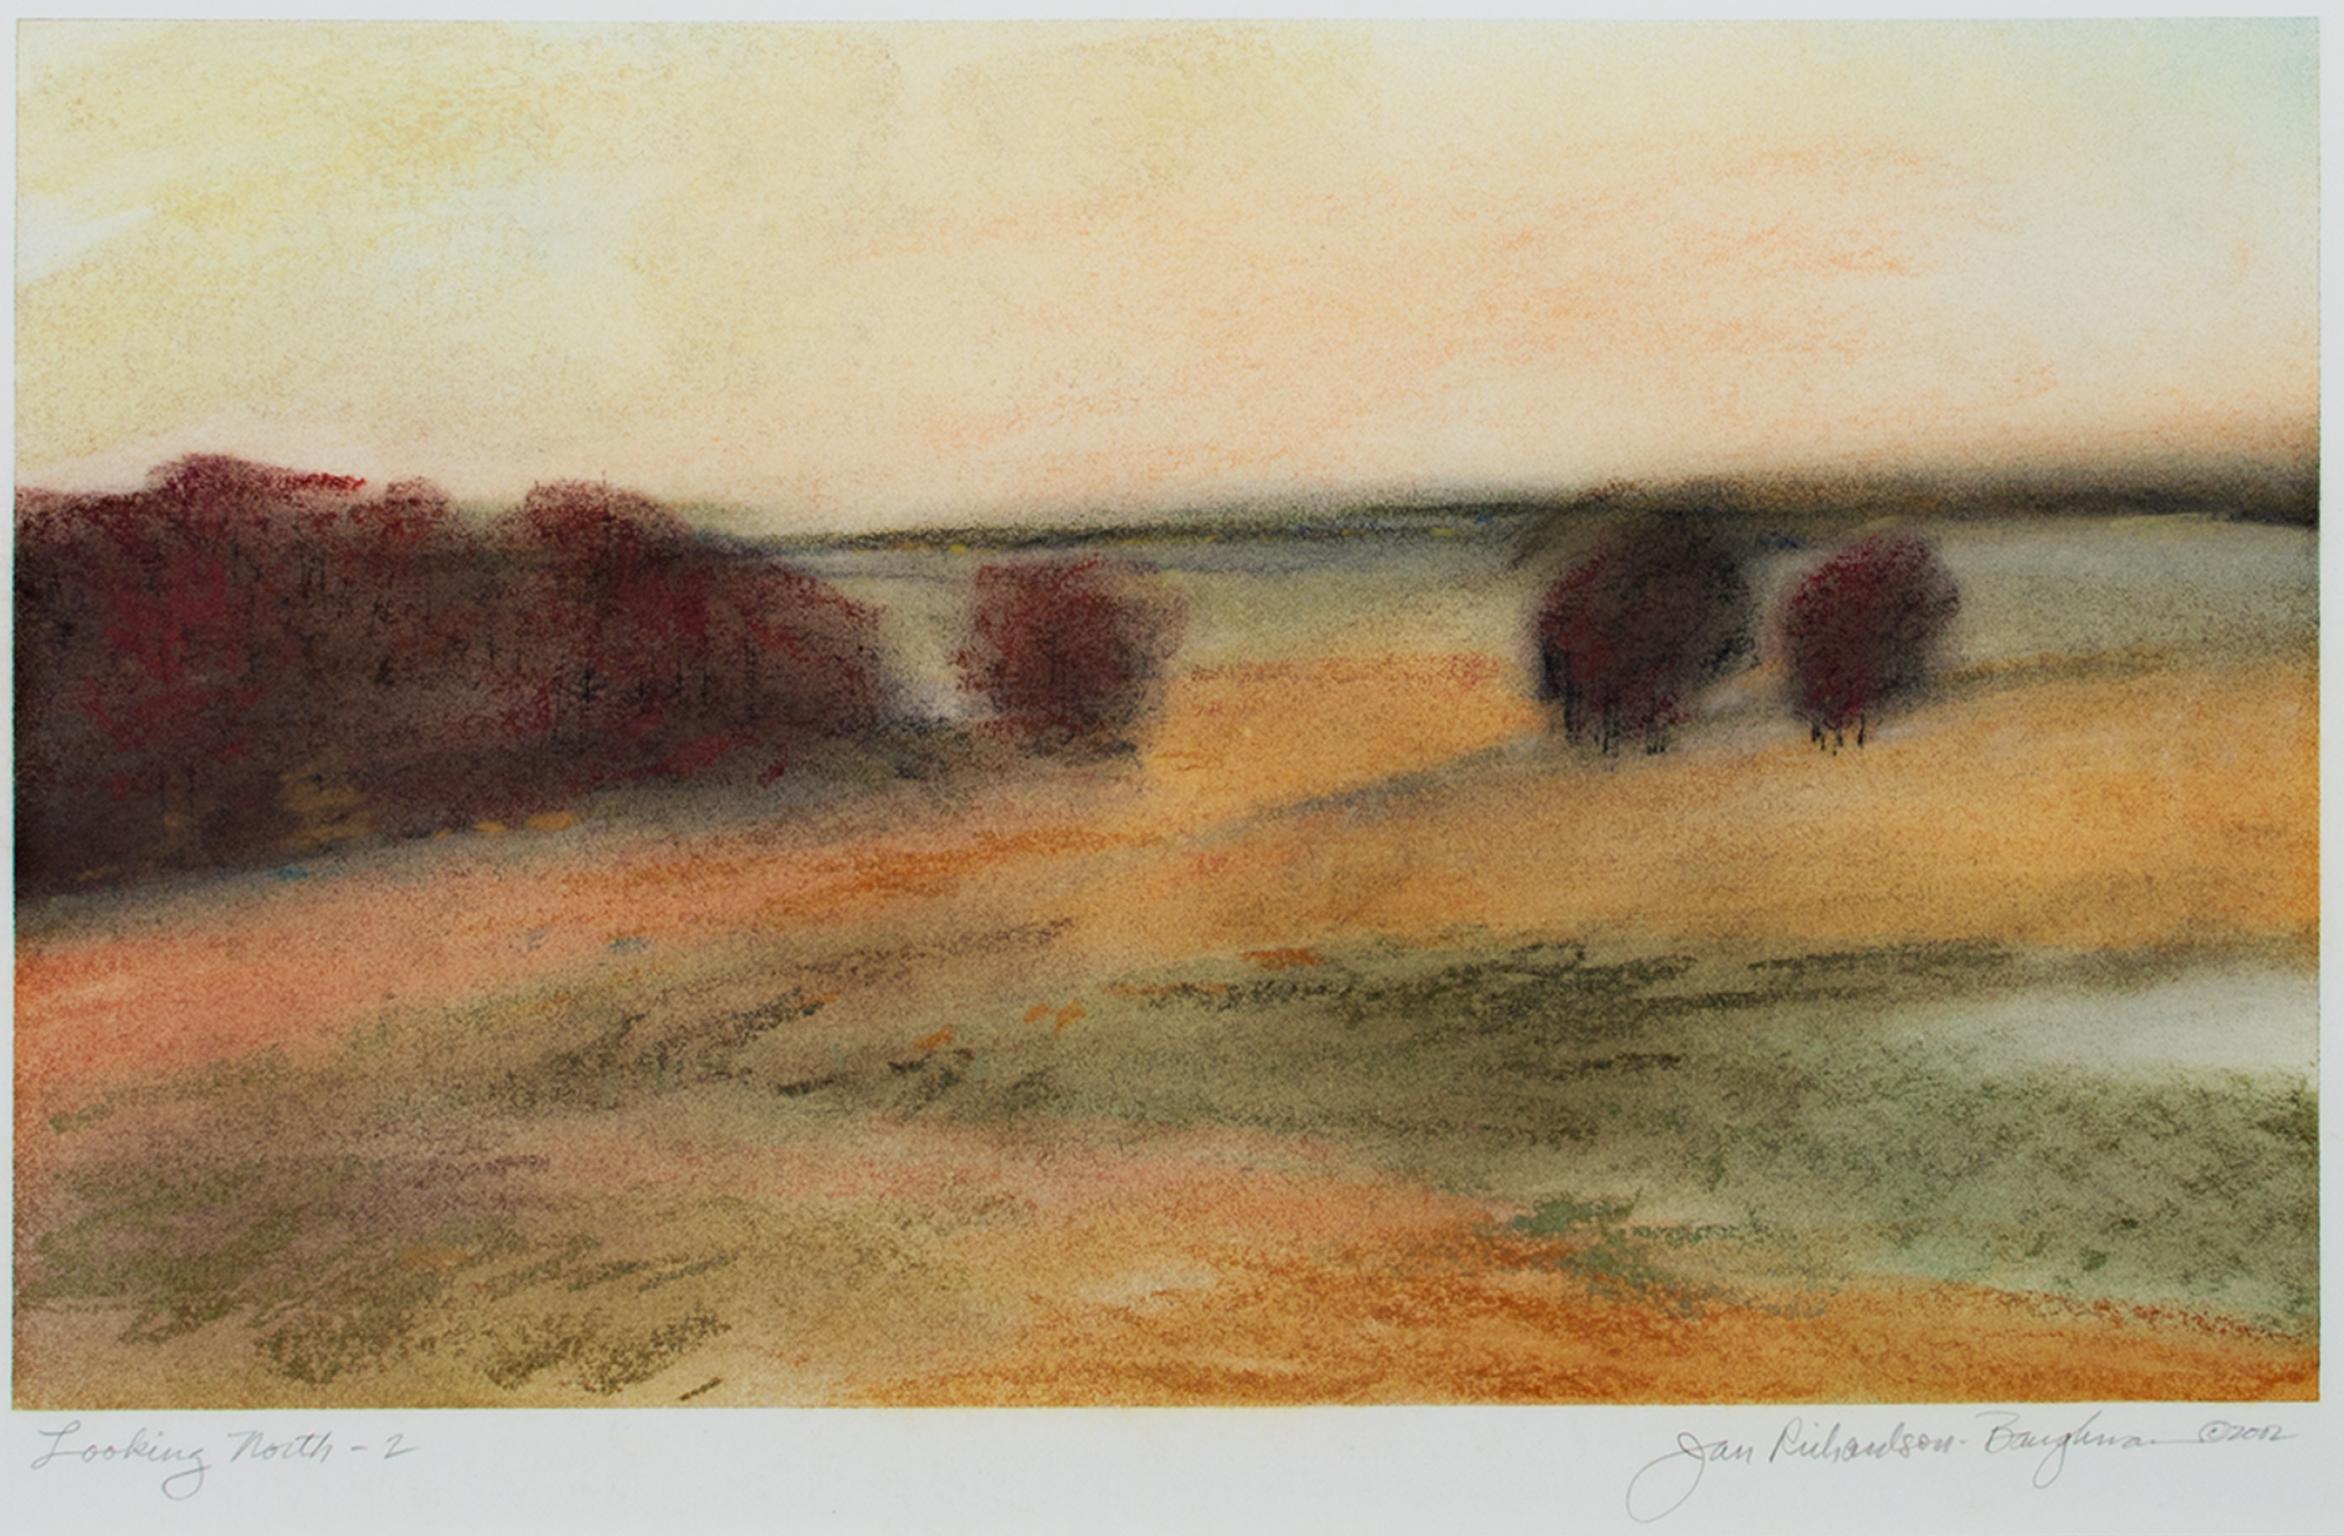 "Looking North 2, " Orange Landscape Pastel signed by Janet Richardson-Baughman